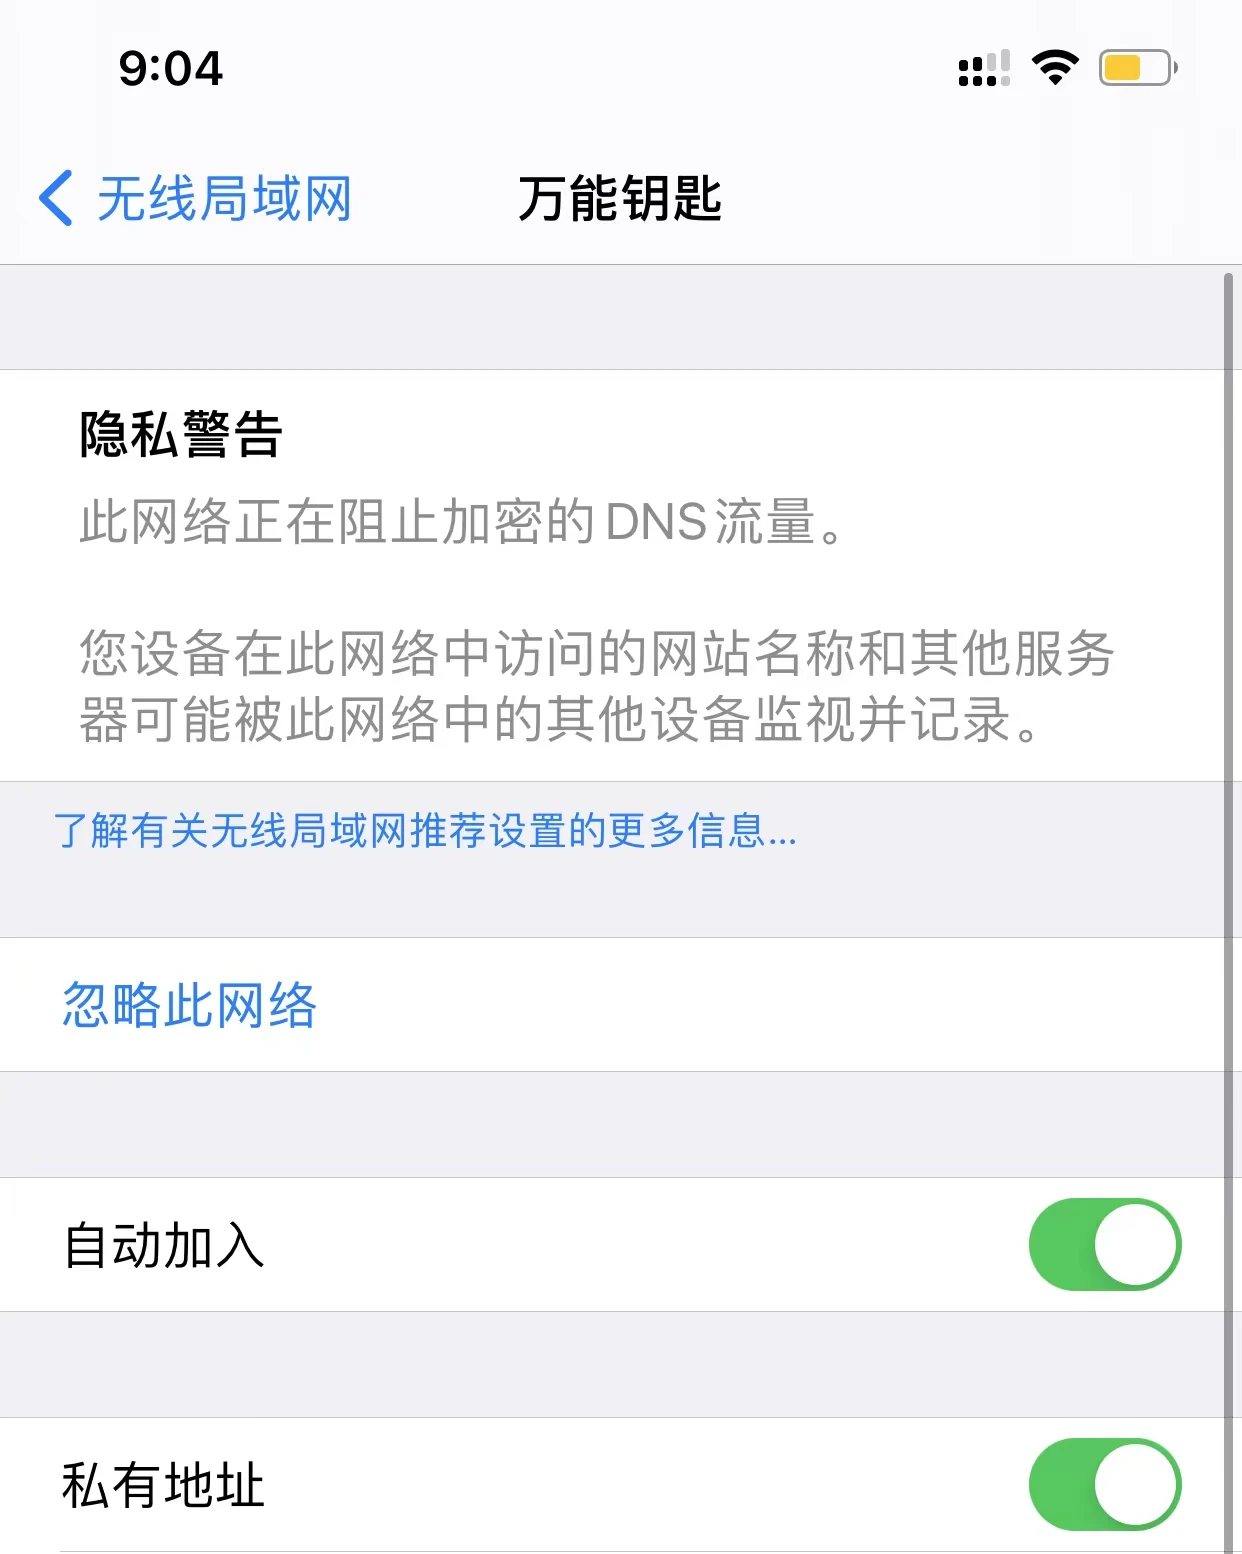 wifi显示隐私警告-k2刷的老毛子-惠小助(52huixz.com)